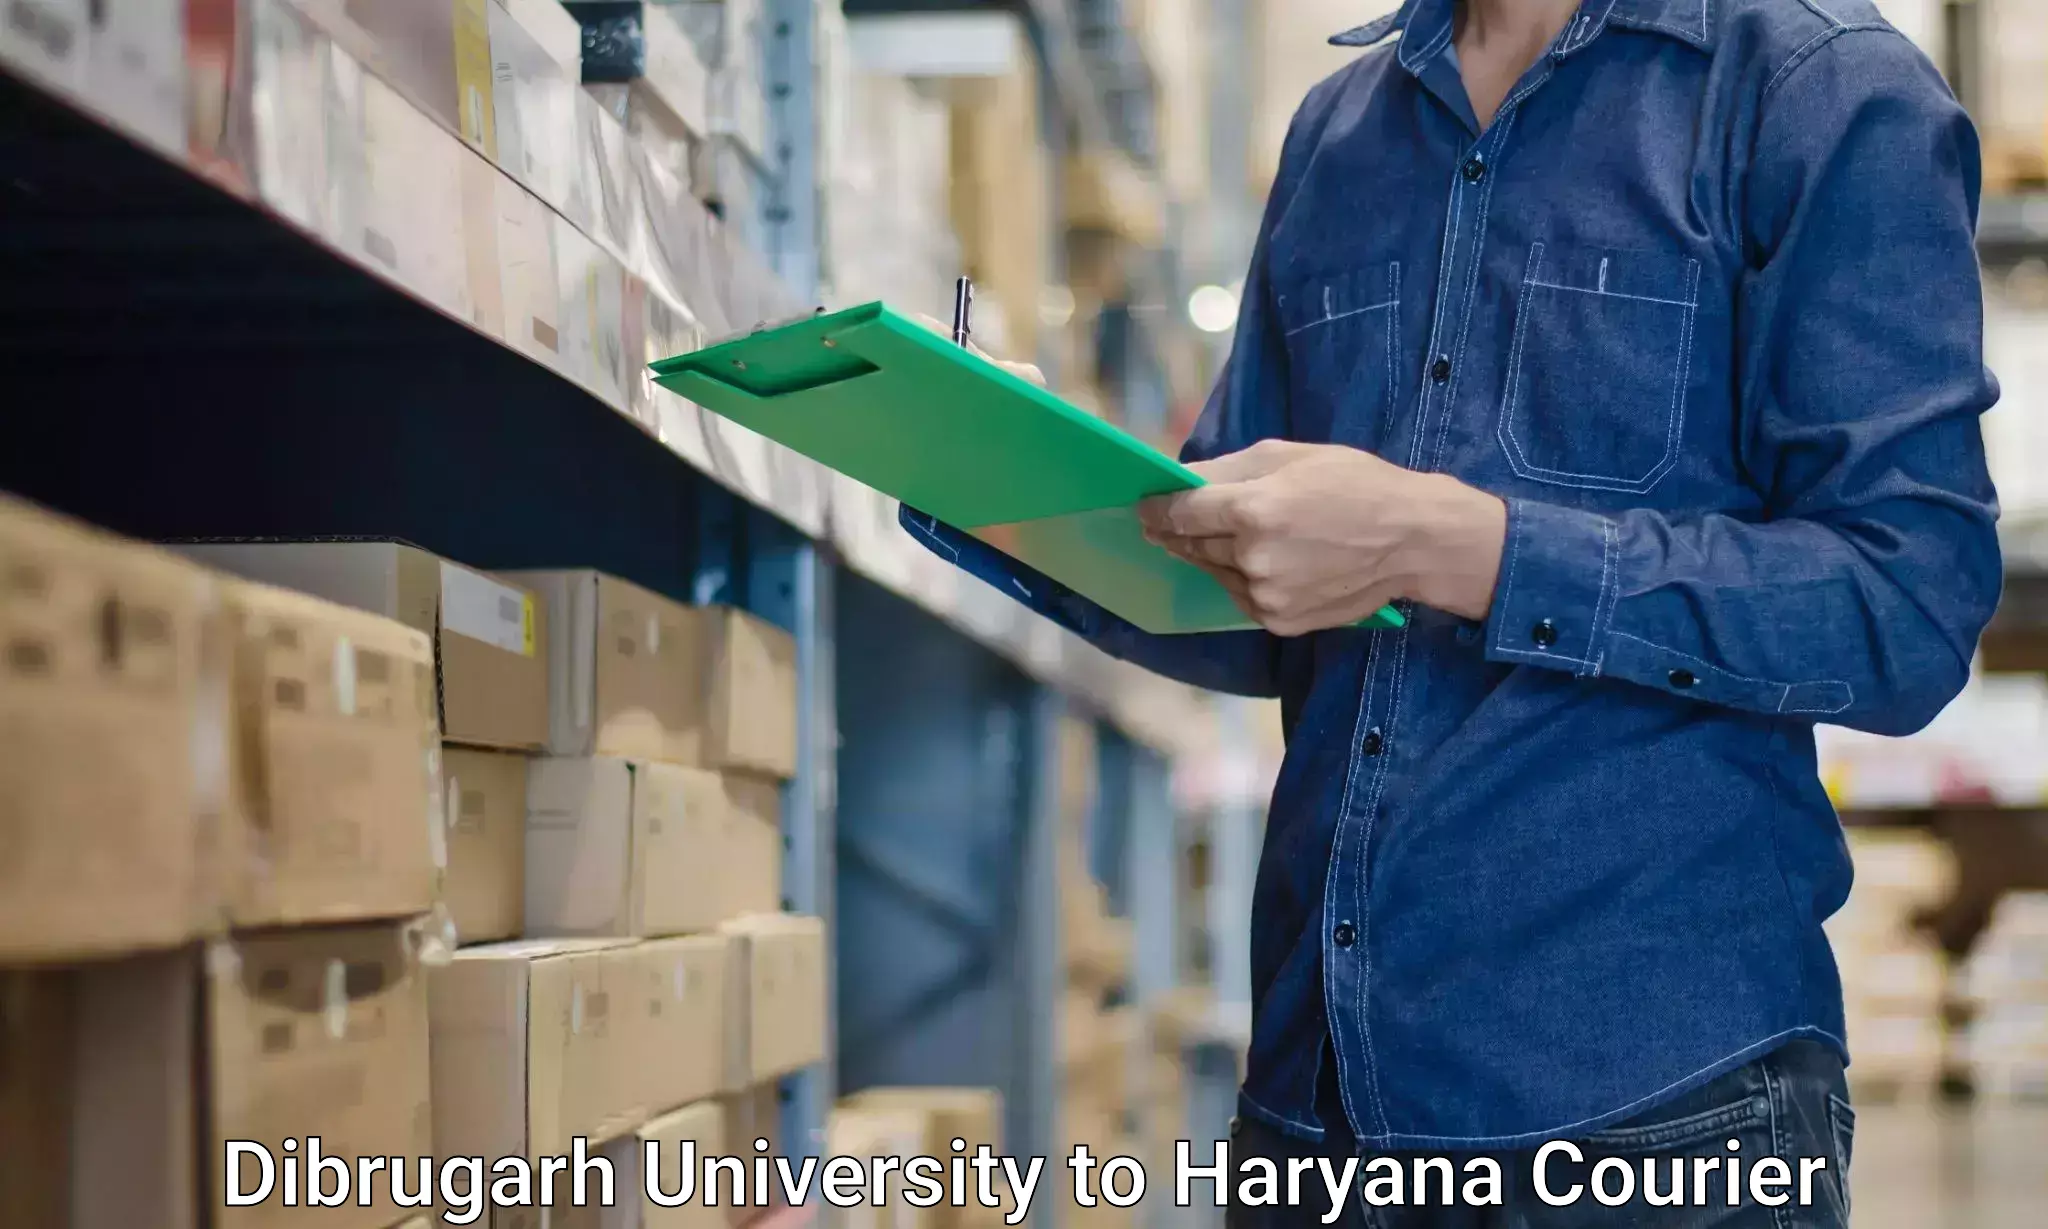 Furniture transport company Dibrugarh University to Haryana